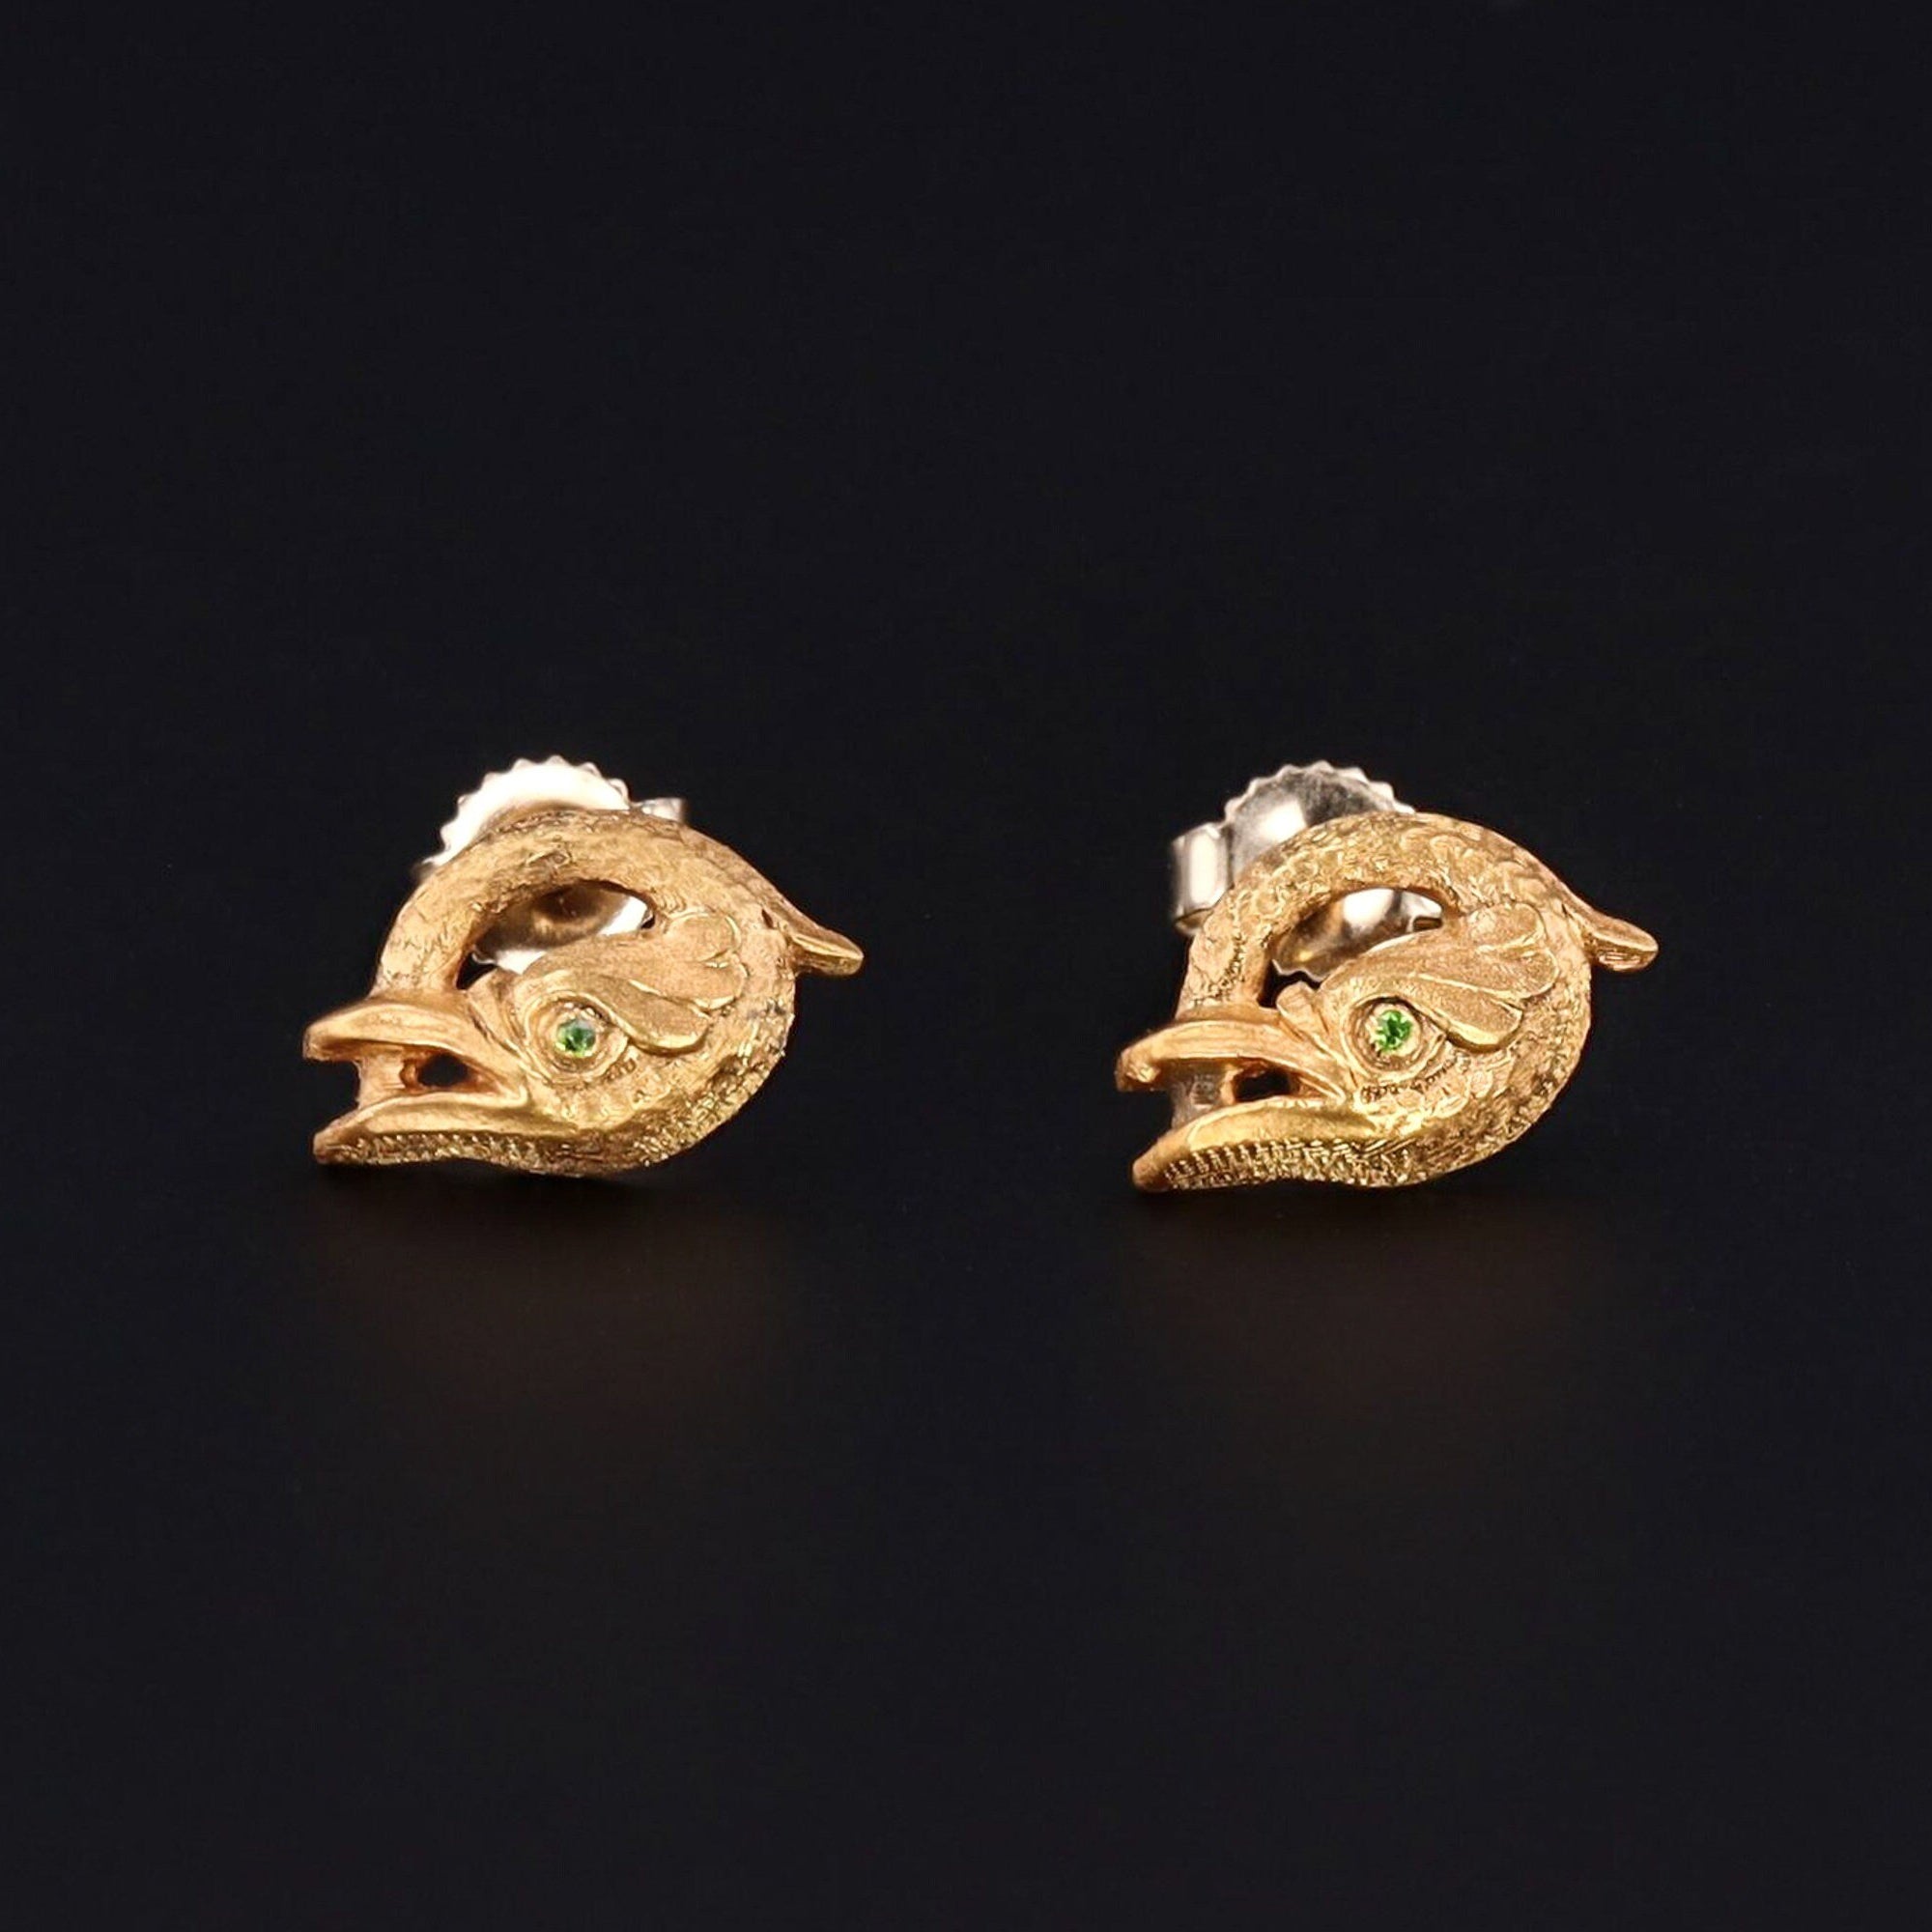 Basilisk Earrings | 14k Gold & Demantoid Garnet Earrings 